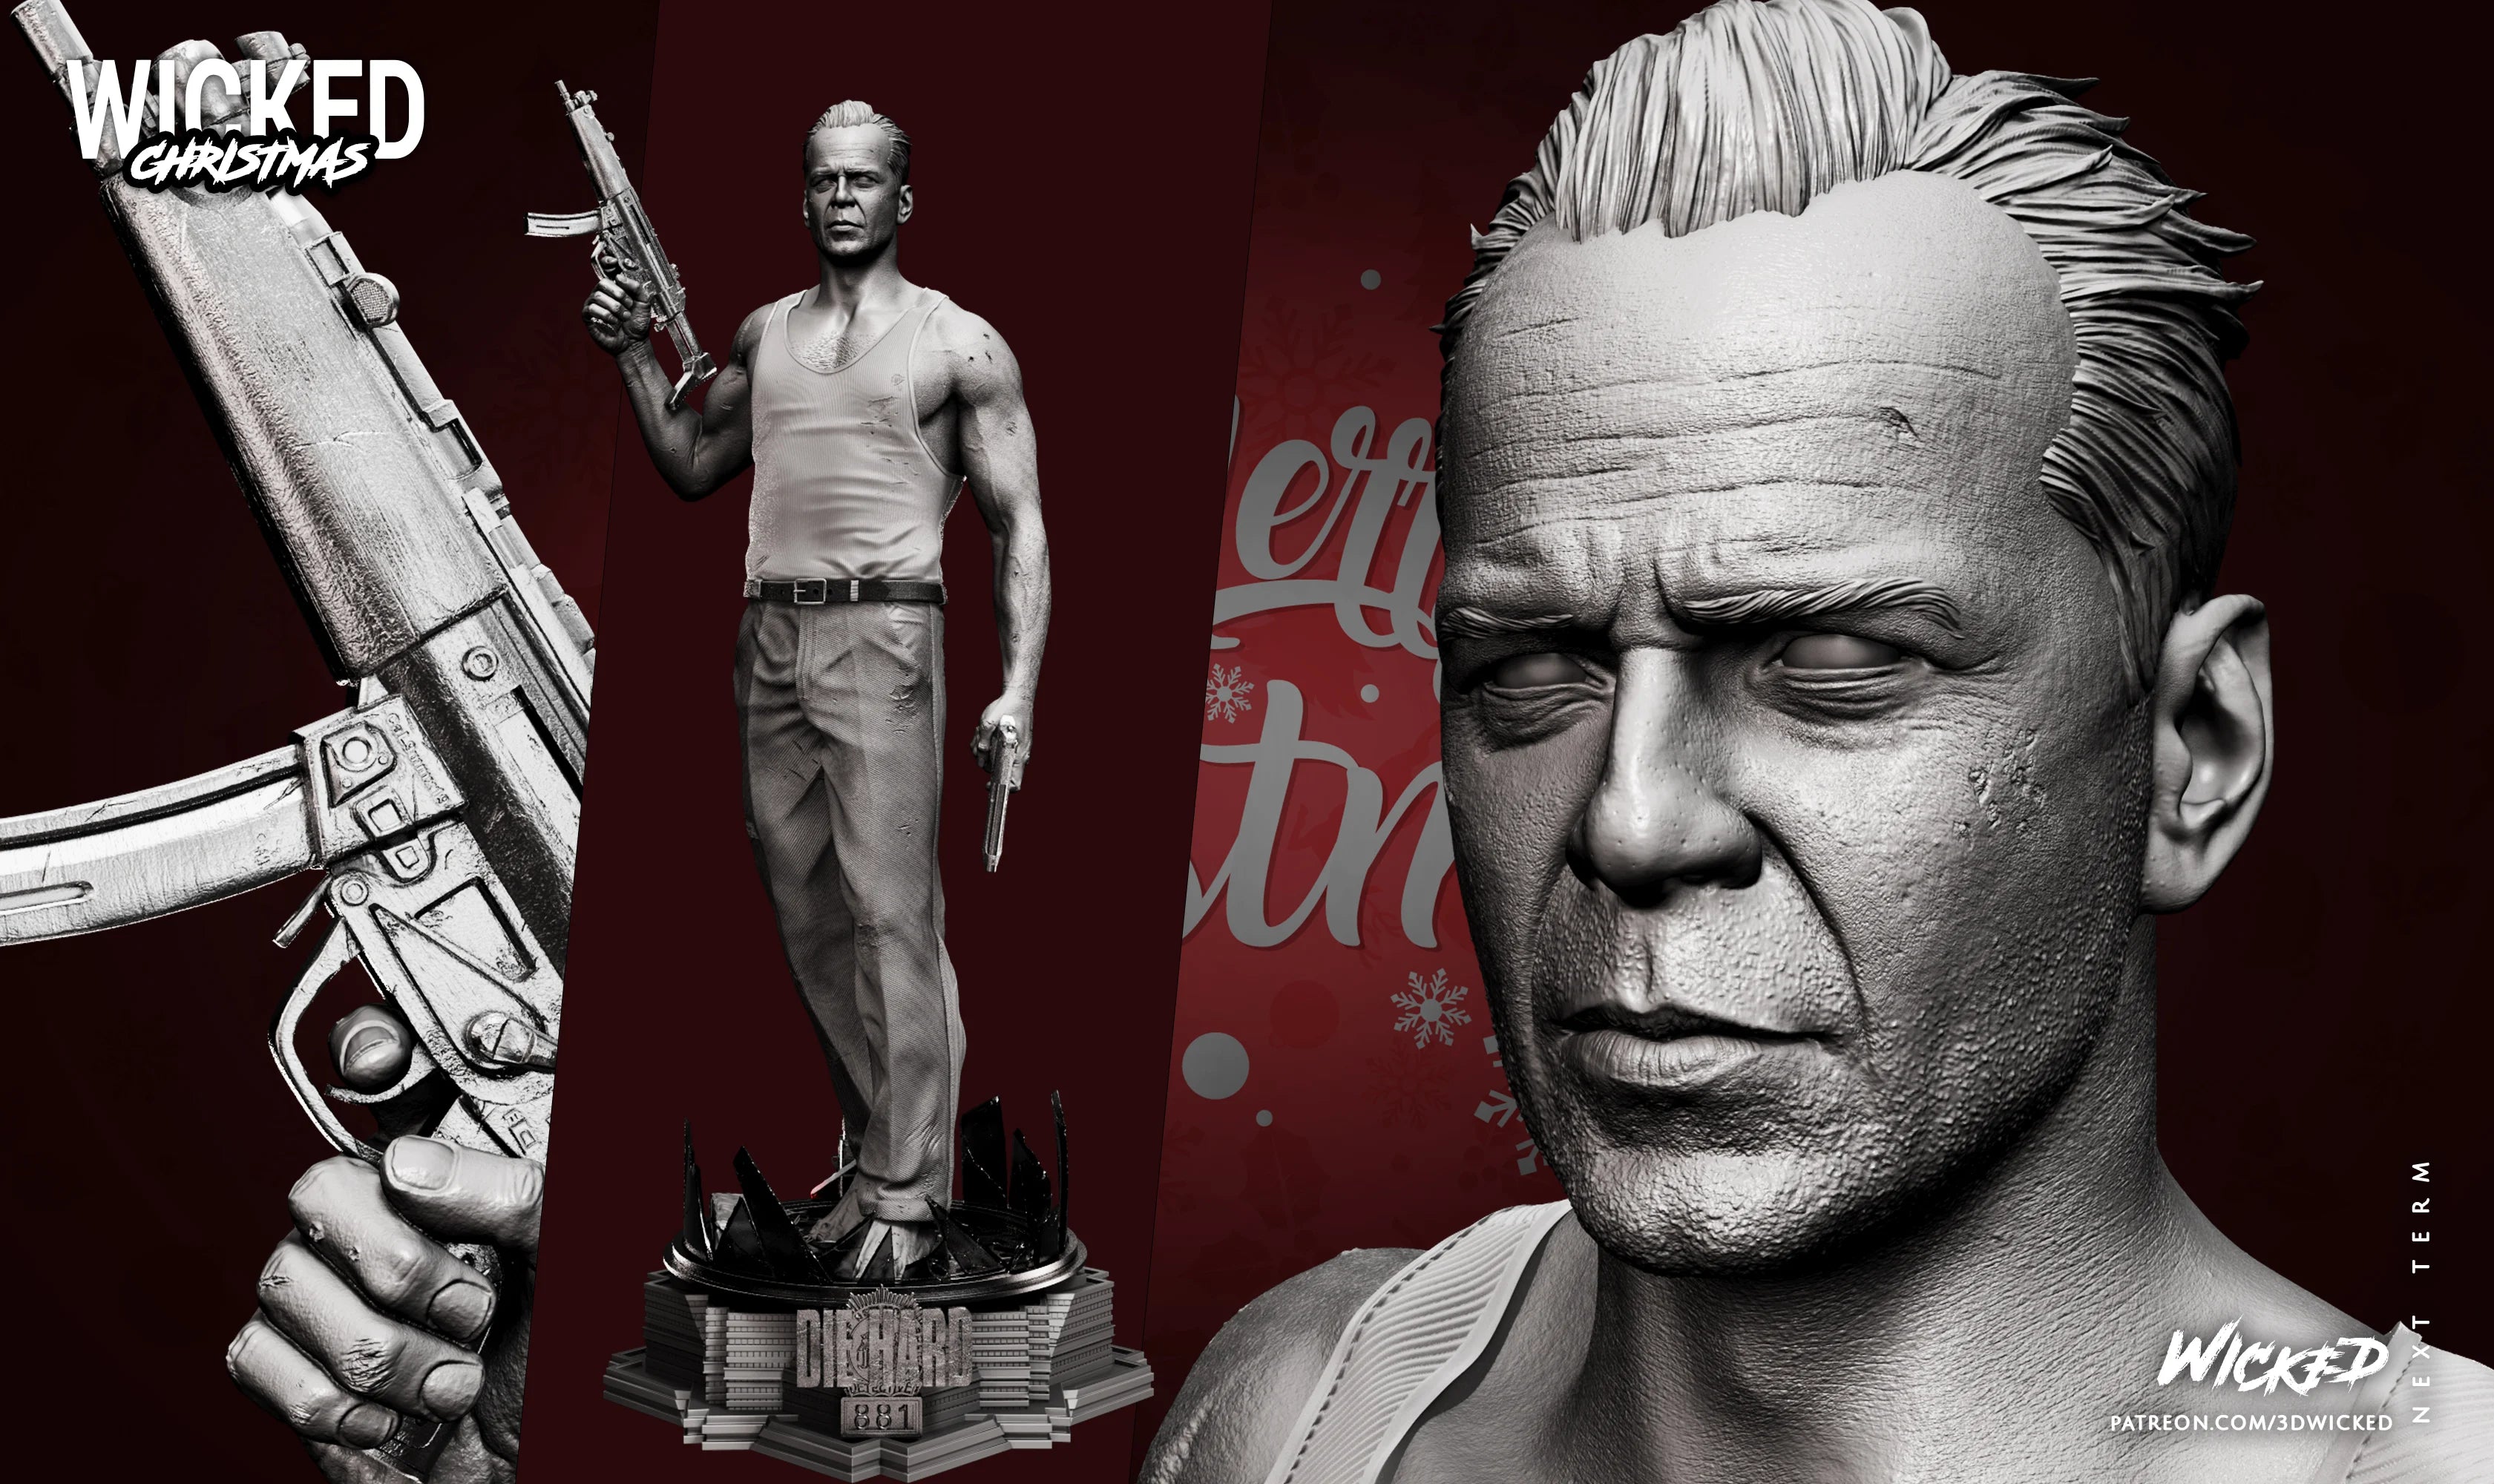 Die Hard - John McClane - Bruce Willis 3d printed - 1:6 Scale 350mm (Fan Art)